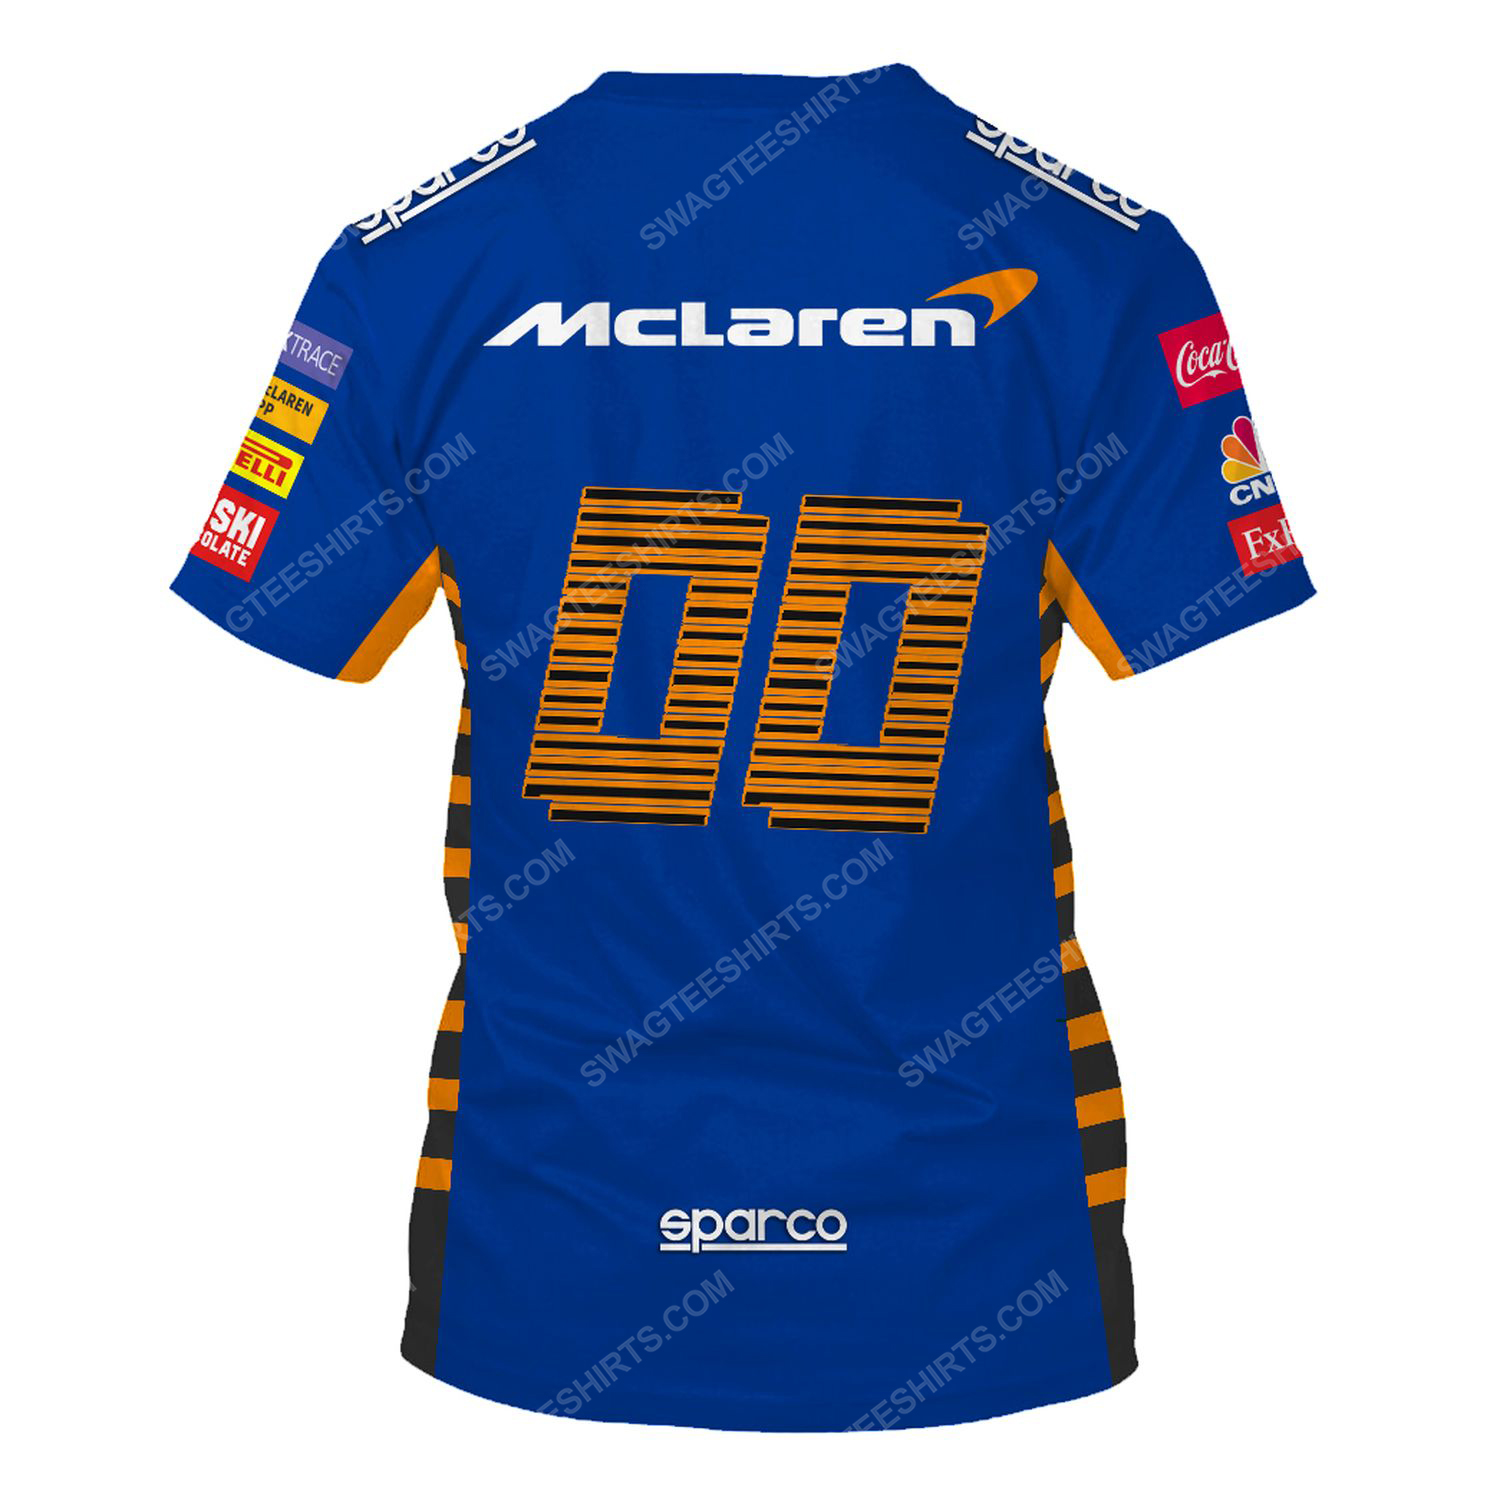 Dell technologies racing team motorsport full printing tshirt - back